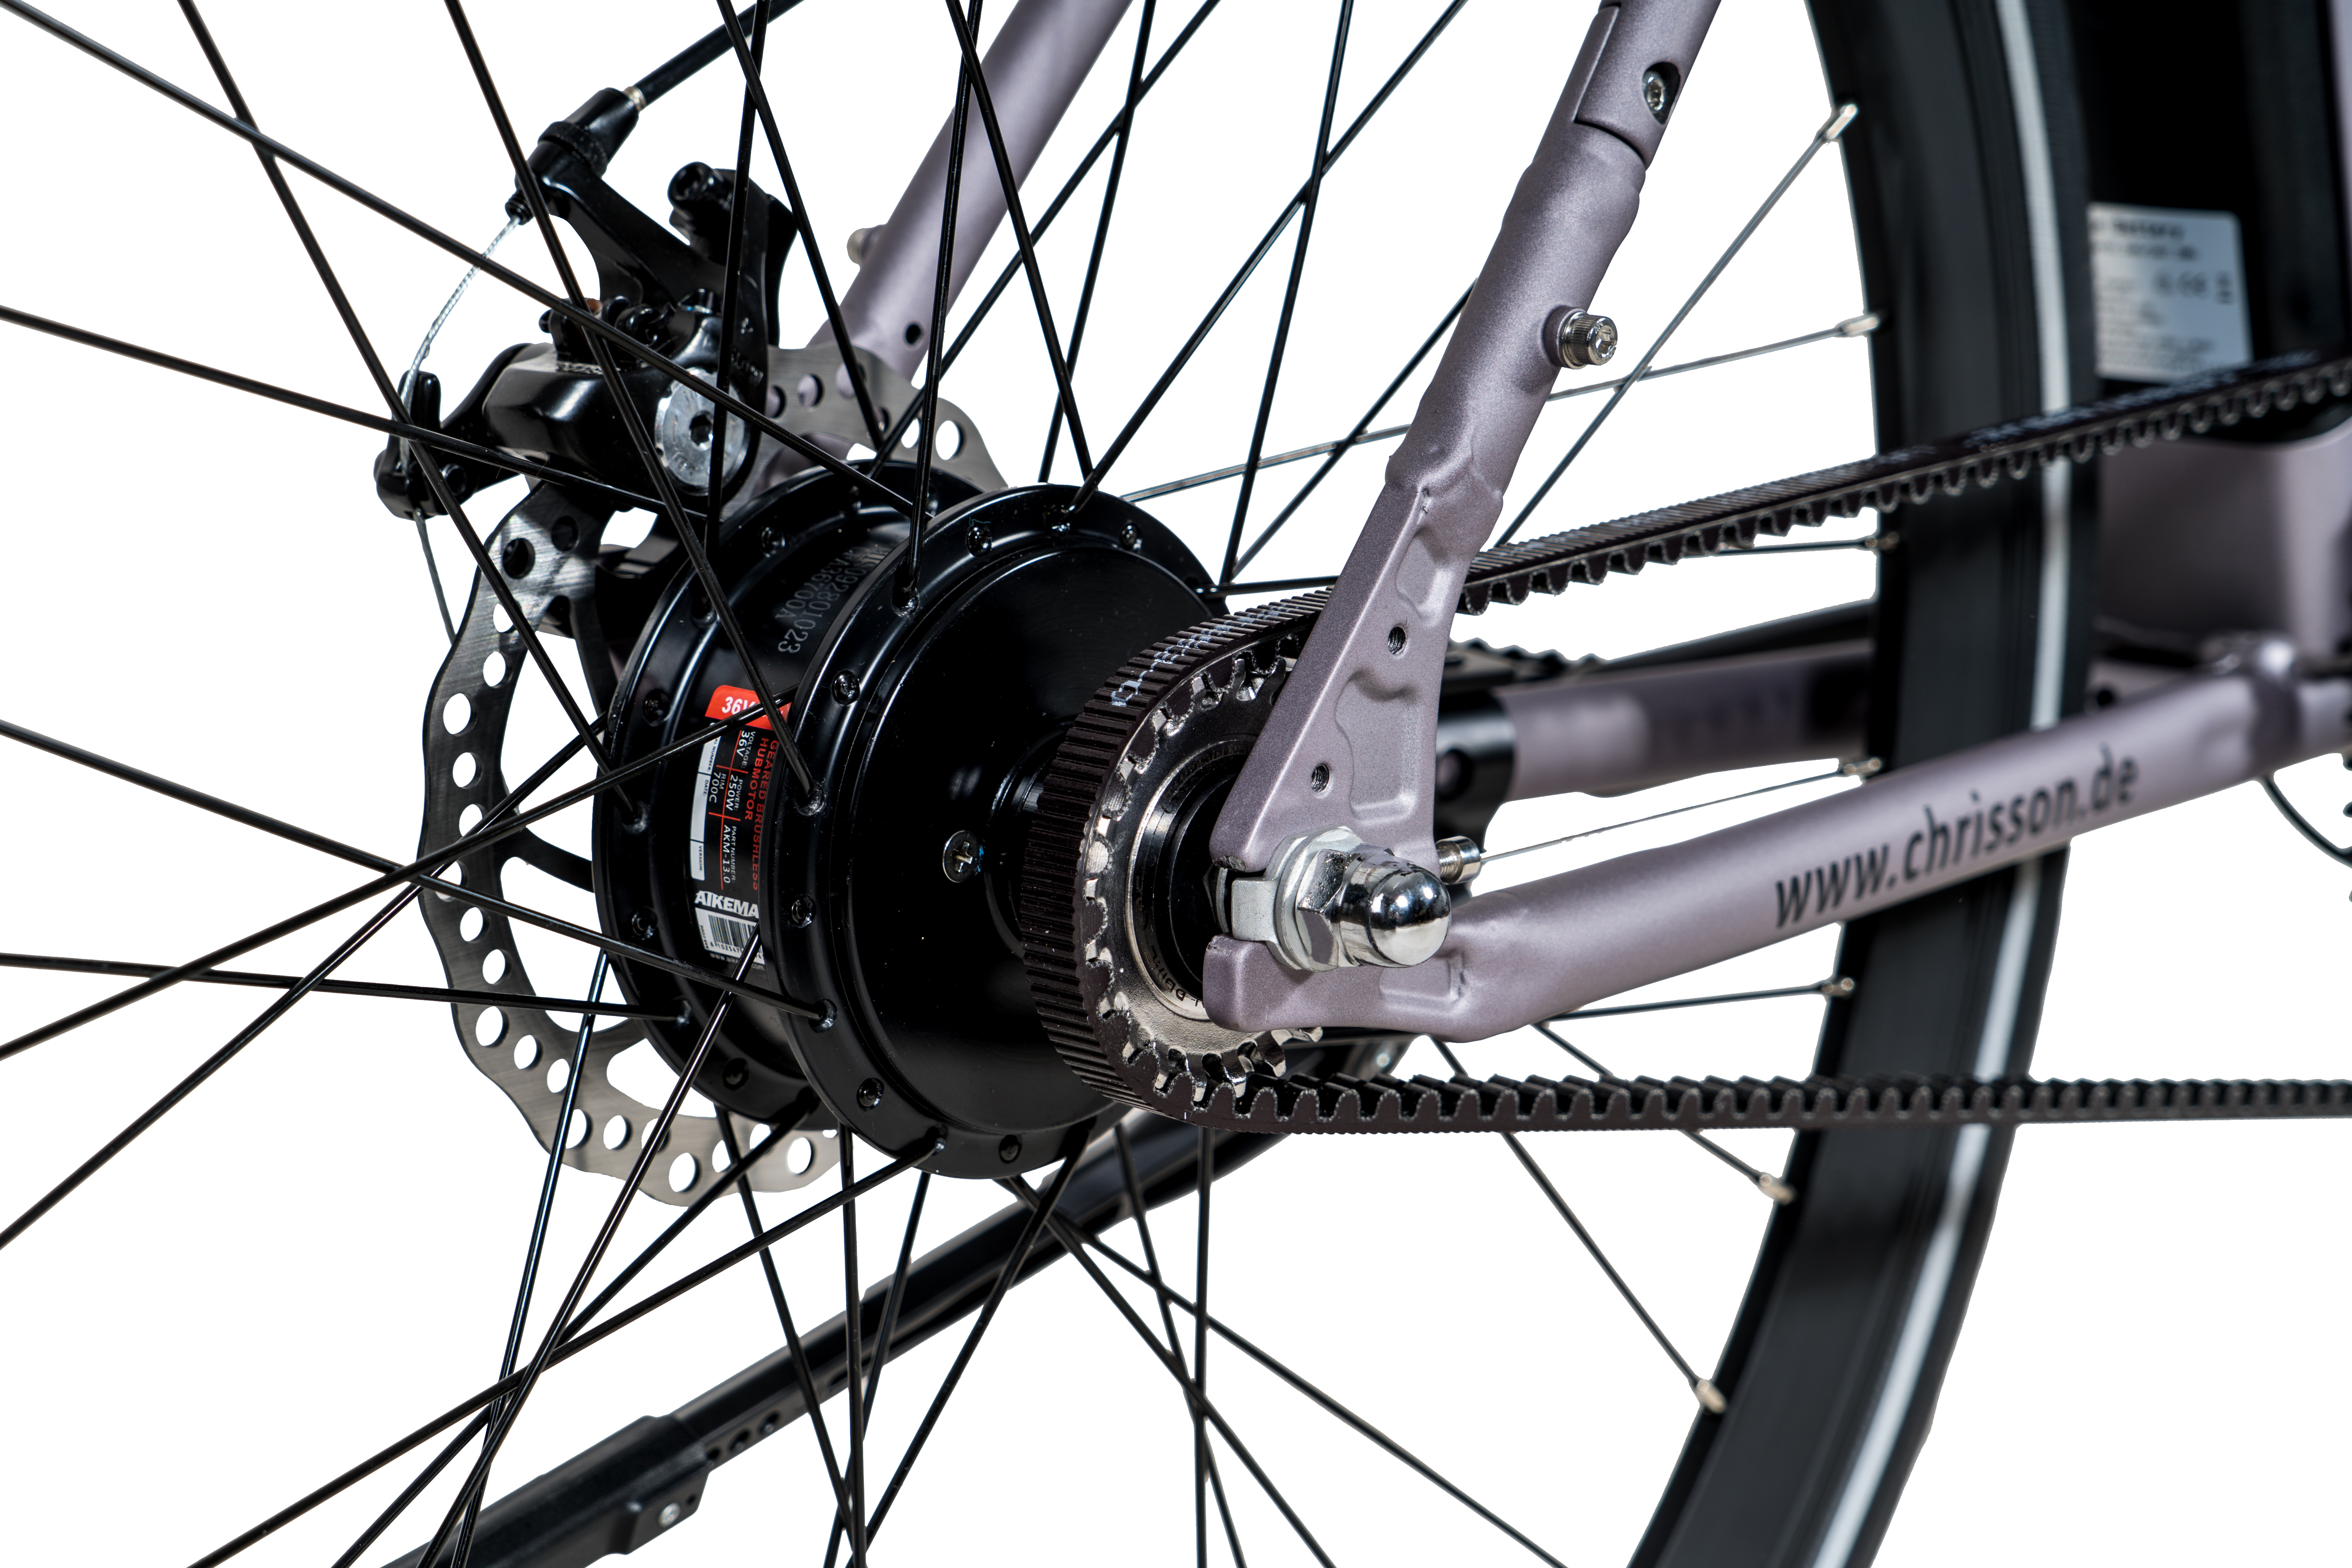 367 cm, Unisex-Rad, Urbanbike Zoll, grau) Riemenantrieb Rahmenhöhe: (Laufradgröße: 52 CHRISSON 28 eOctant Wh,